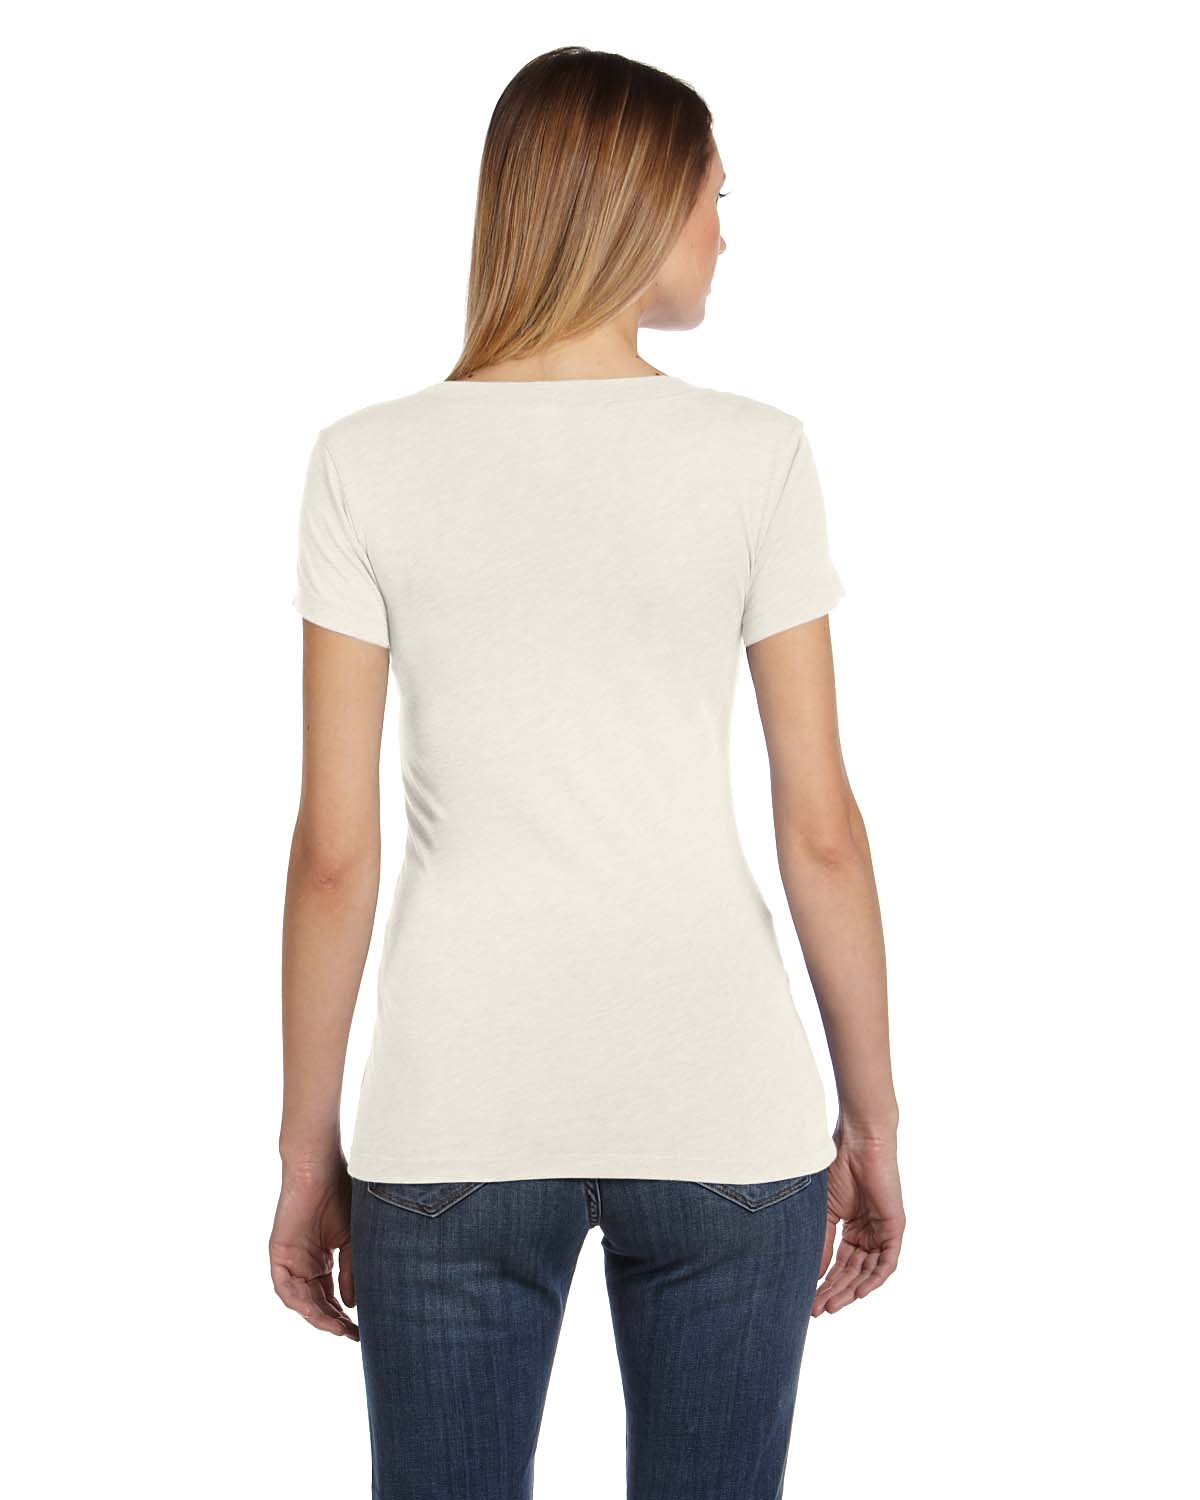 NEW Bella + Canvas Ladies Junior Fit Triblend Short Sleeve T-Shirt M ...